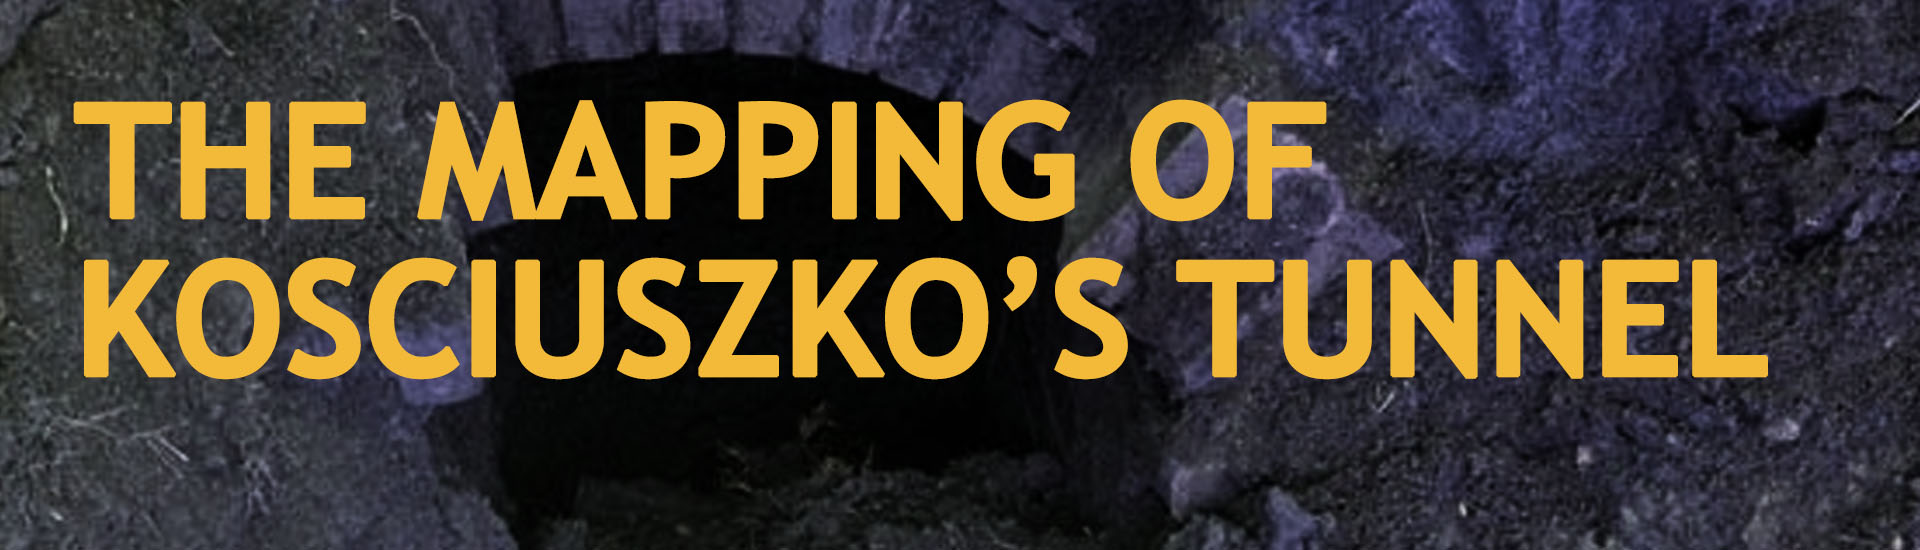 Carolina Stories: Mapping of Kosciuszko's Tunnel